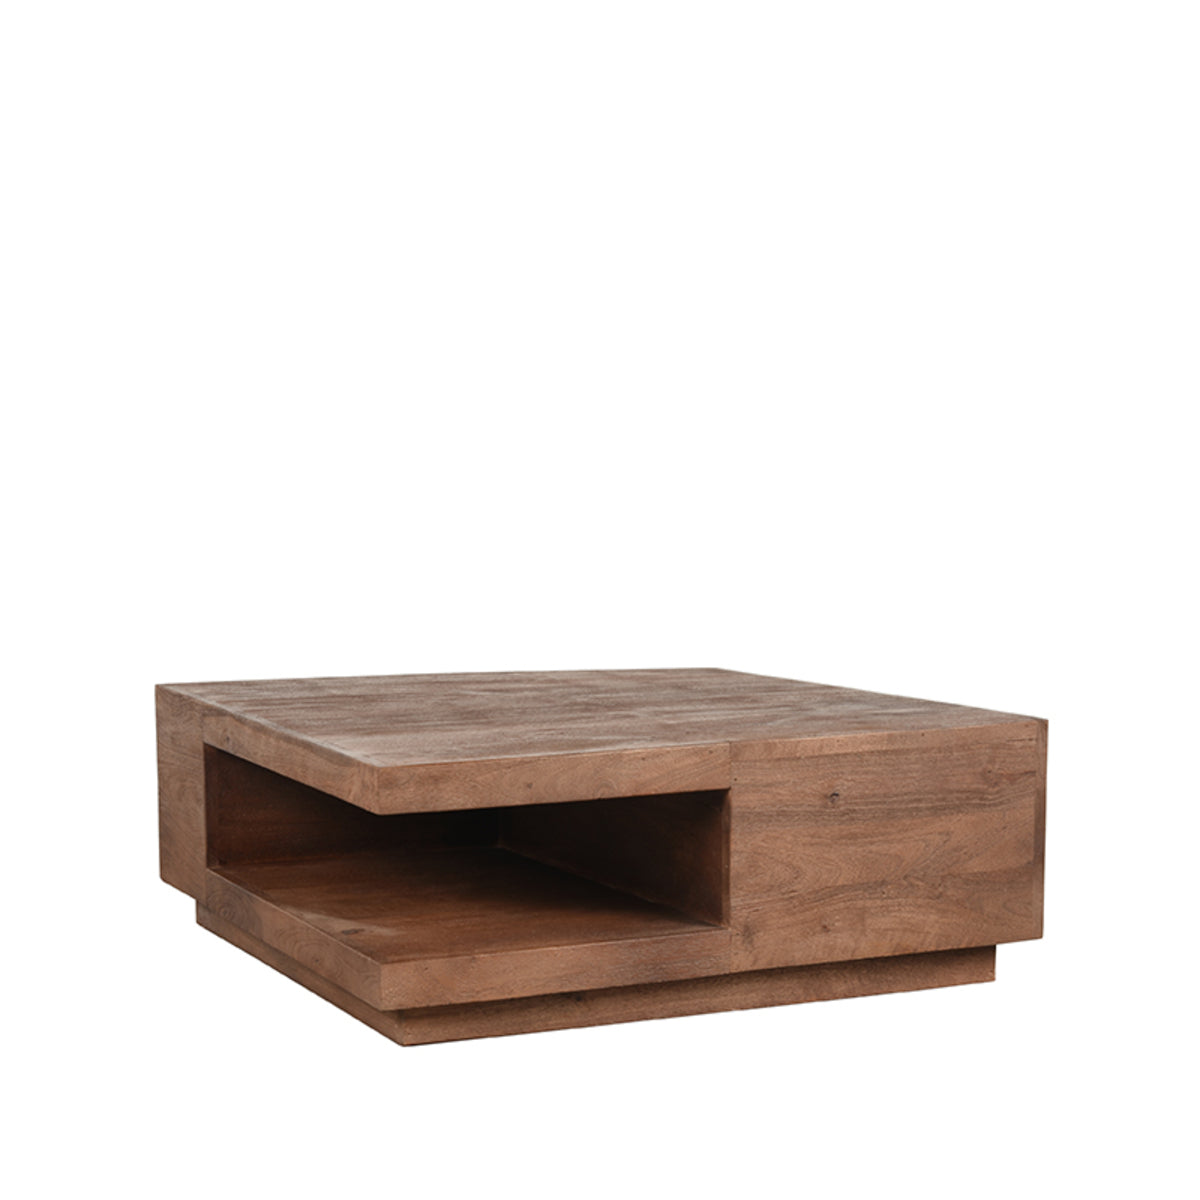 LABEL51 Coffee table Square - Espresso - Mango wood